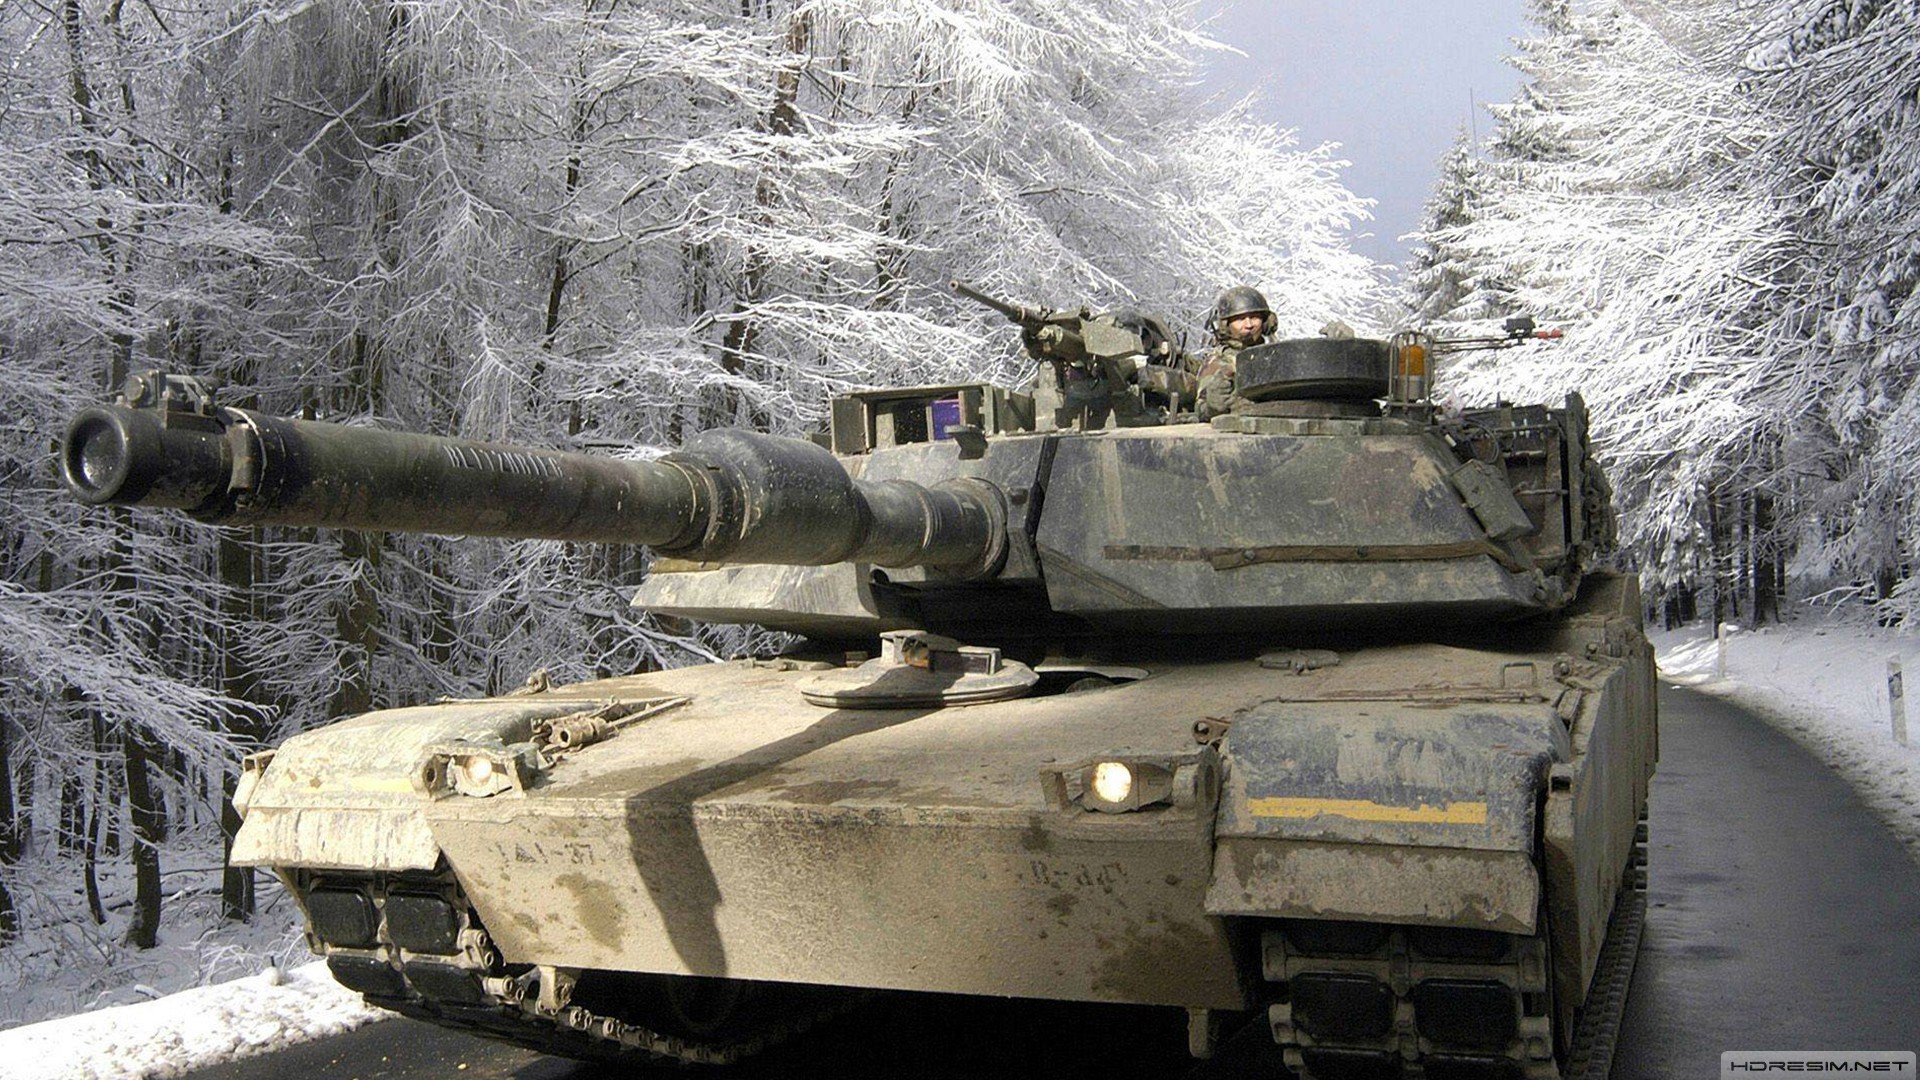 m1 abrams,tank,askeri taşıt,kış,kar,ağaç,asker